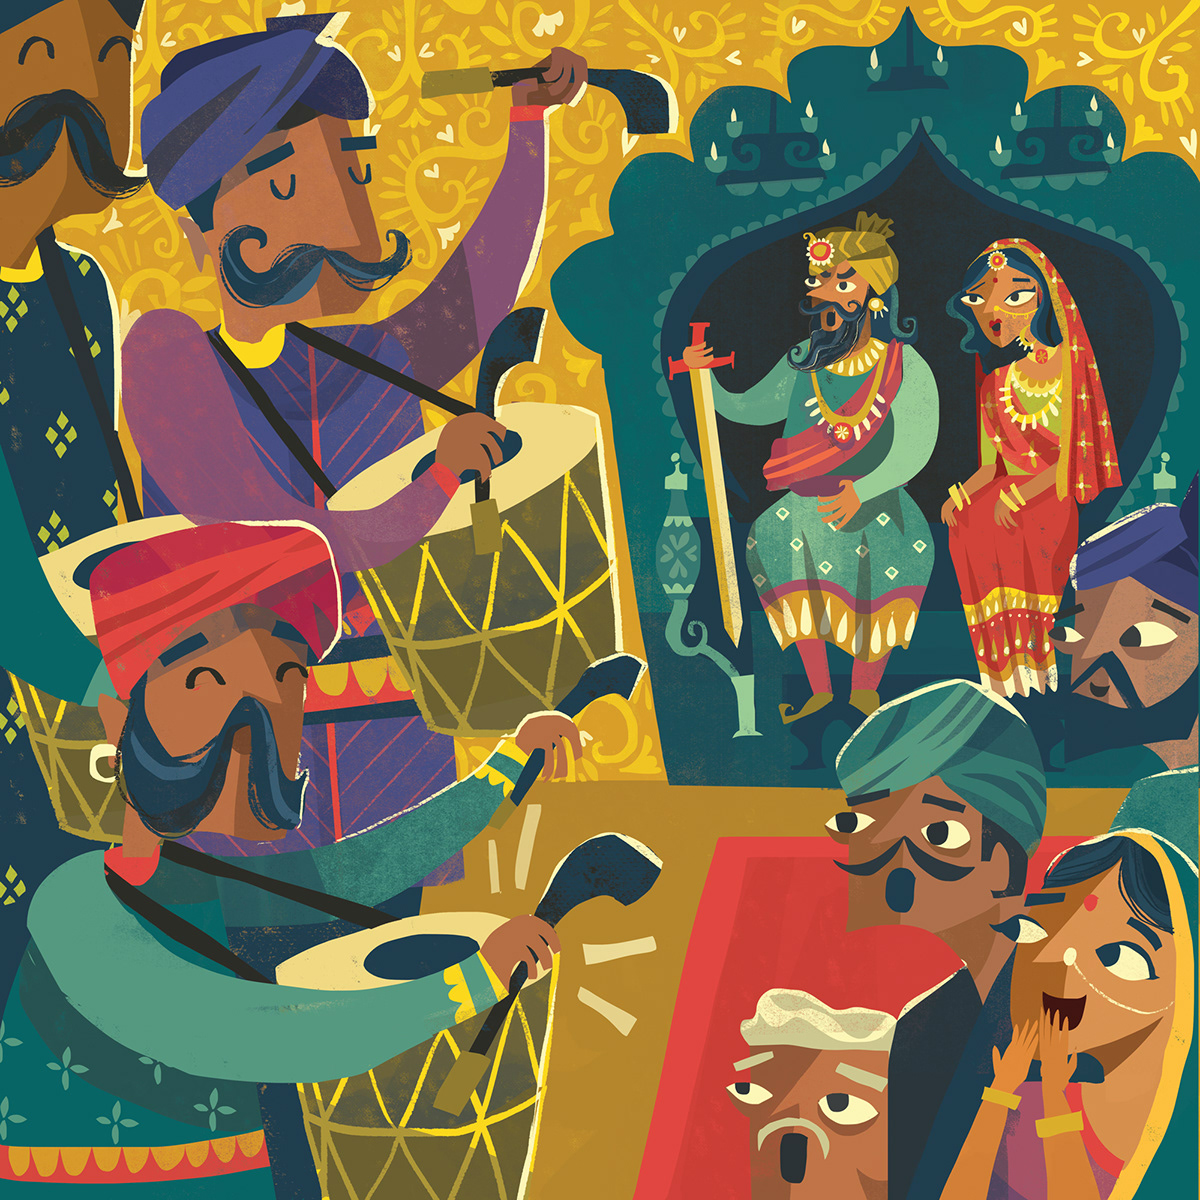 king India illustration folktale indian folktale King illustration royalty story illustration childrens book illustration Picture book Picture book illustration